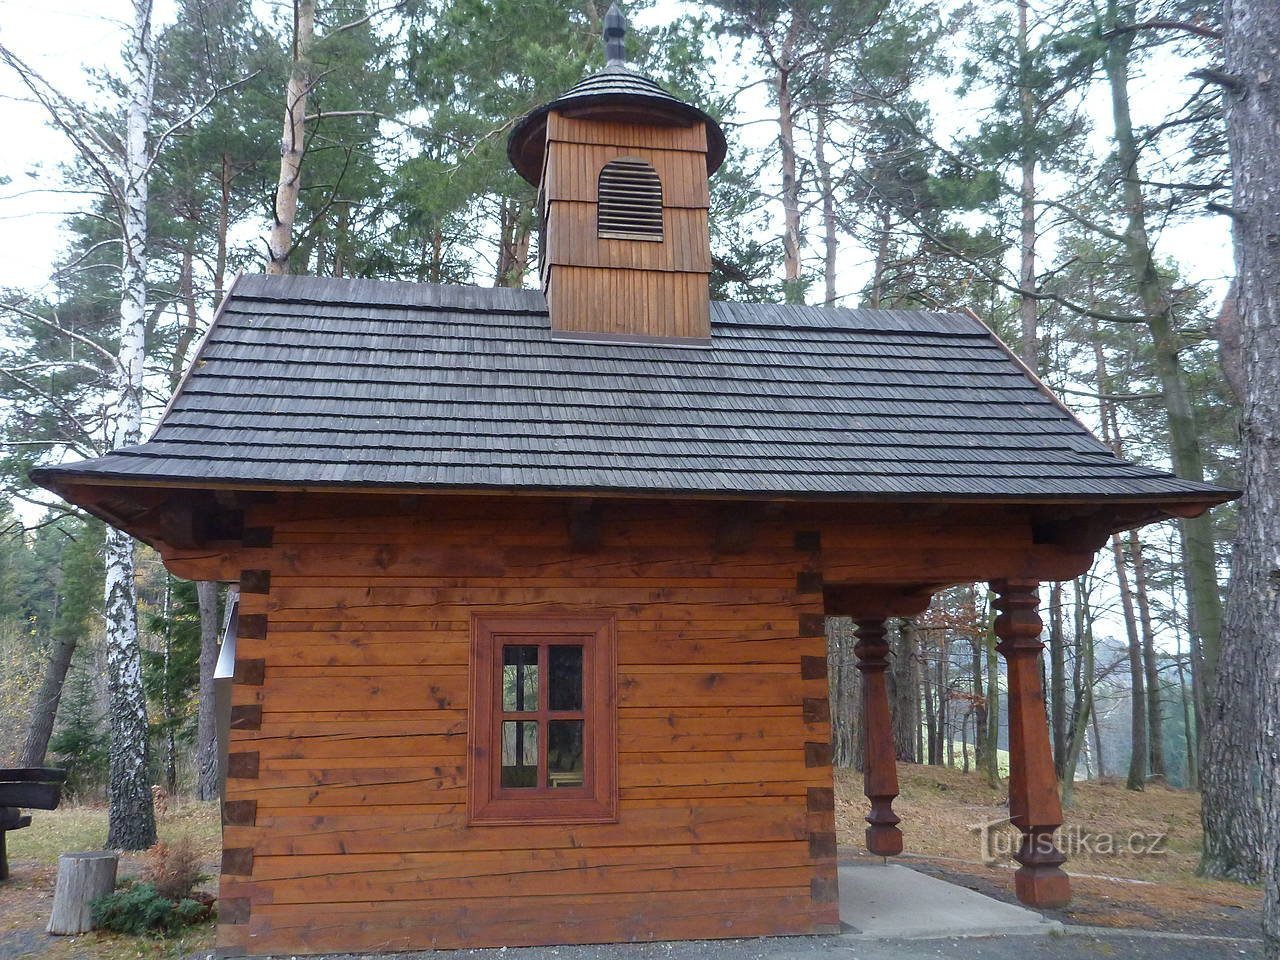 Capela de lemn a Sf. Hubert deasupra Valašská Senicá.